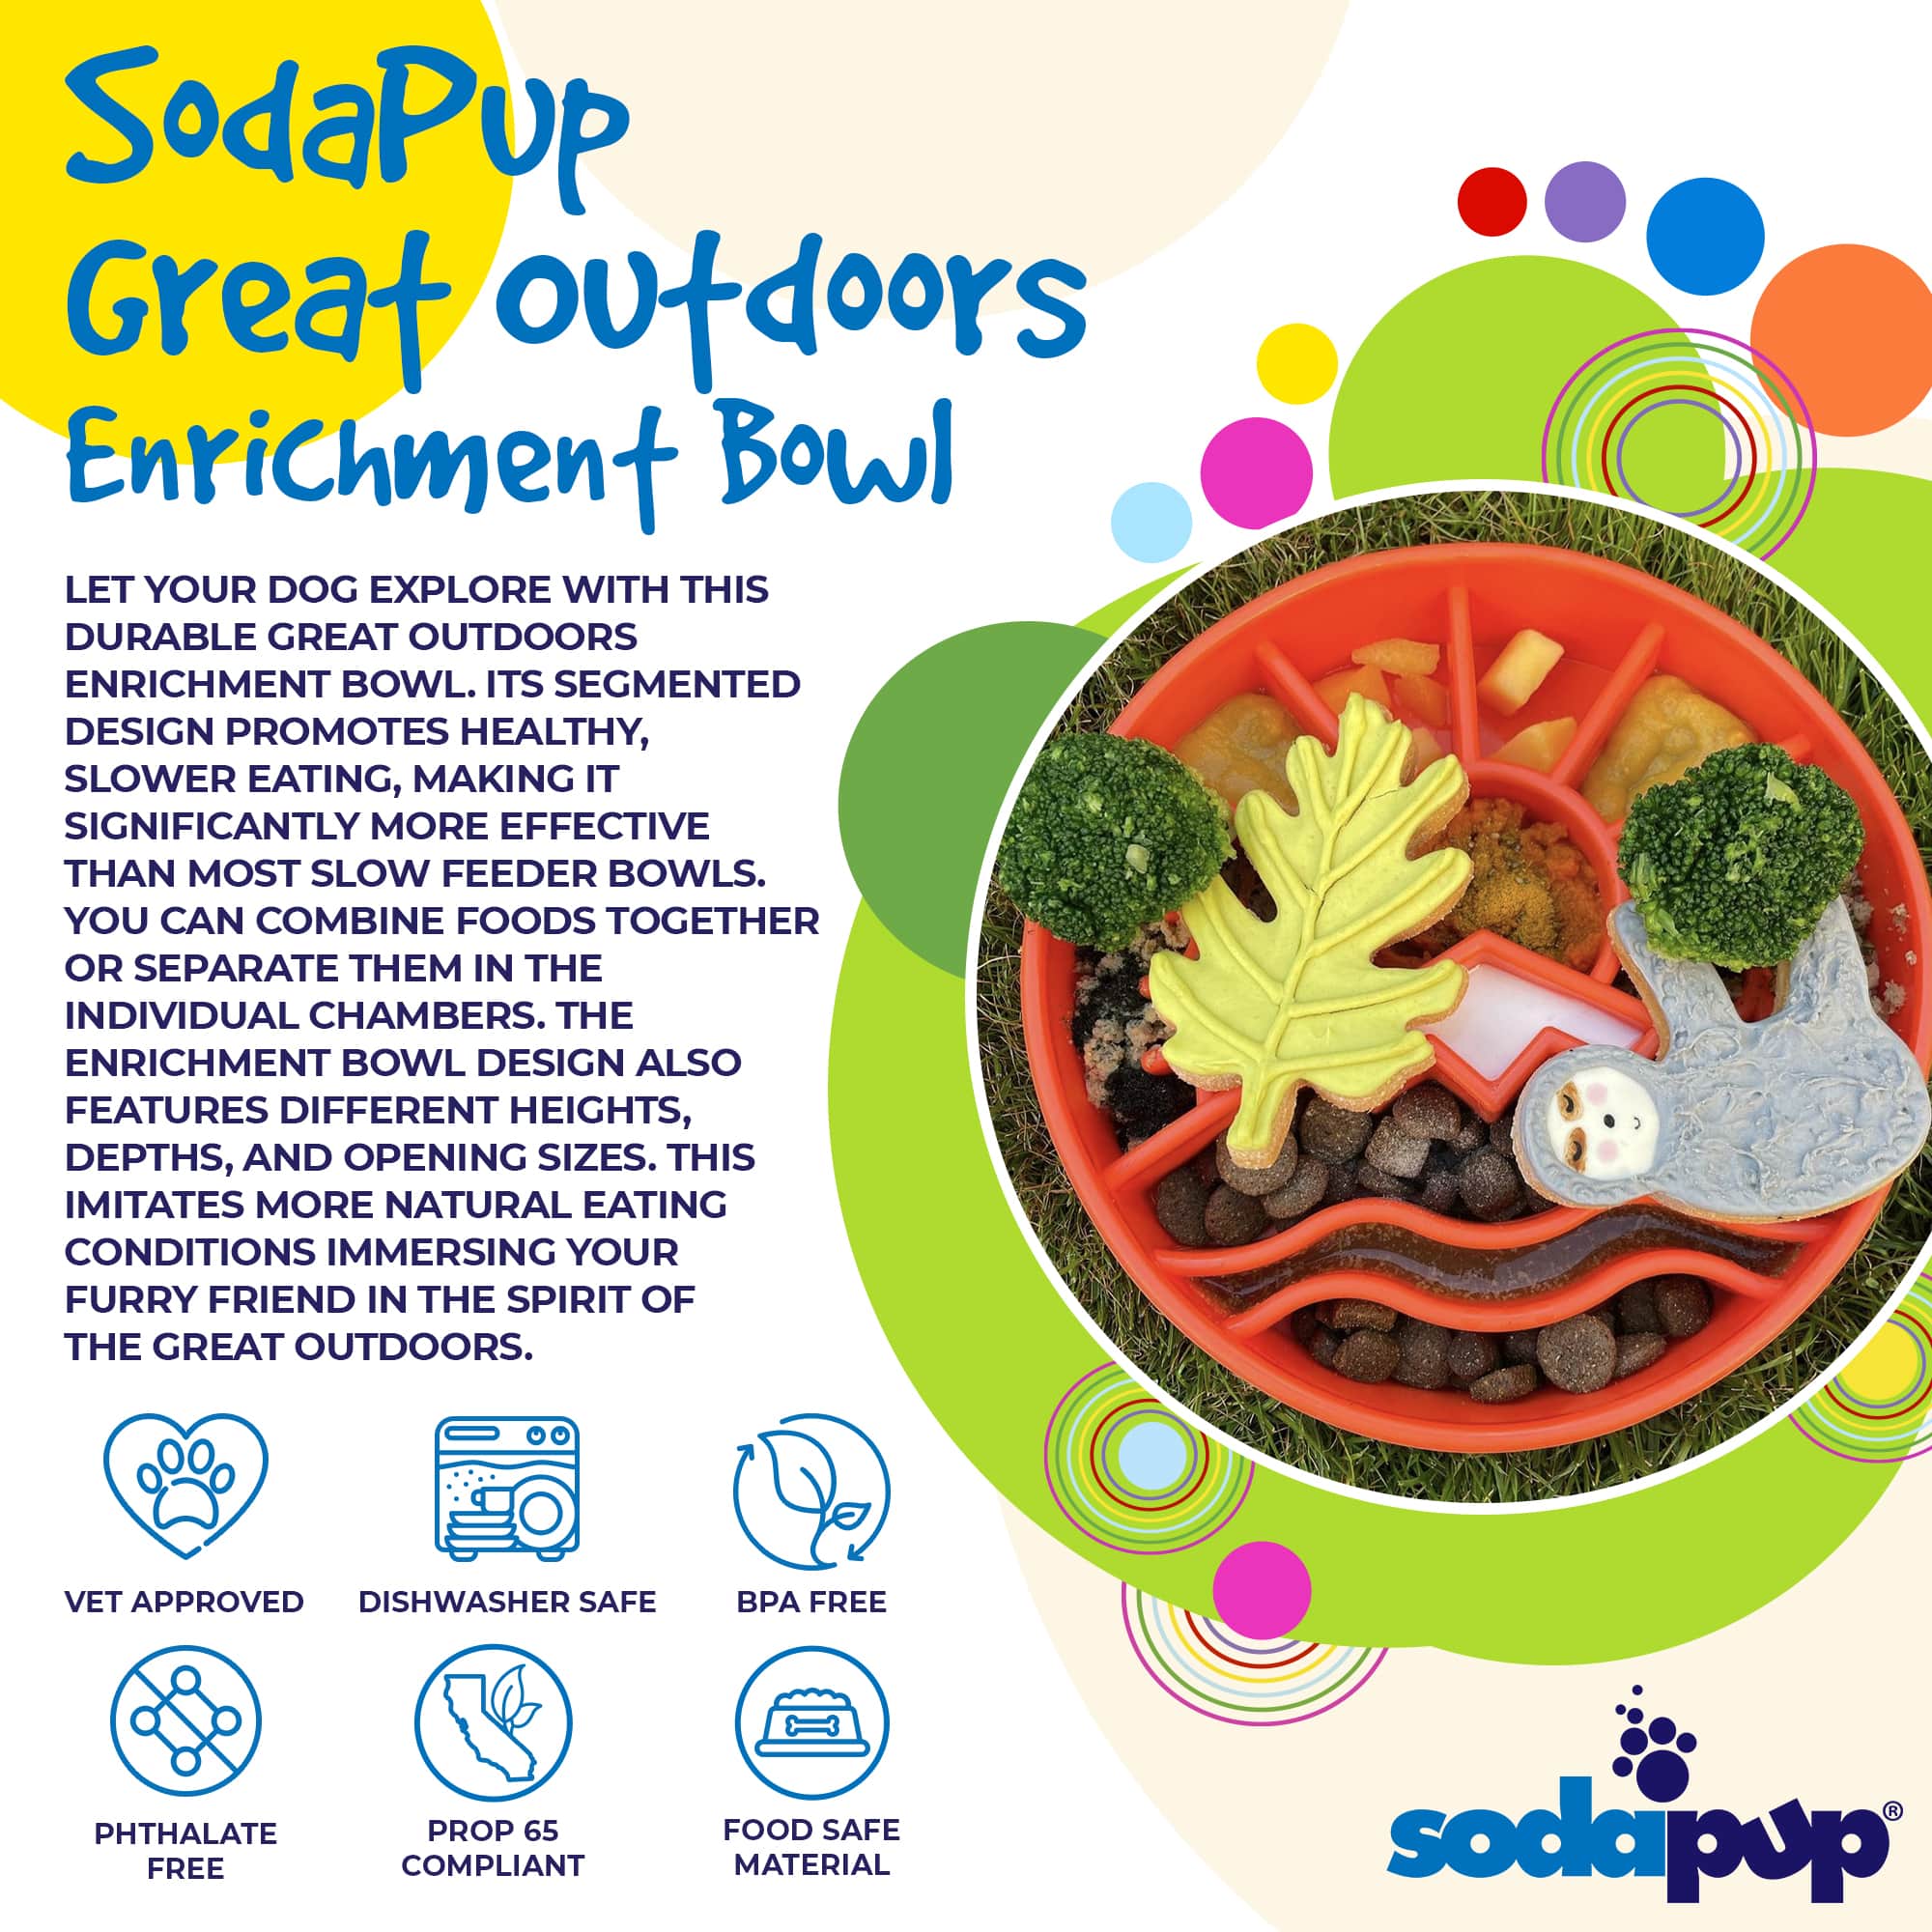 SodaPup Great Outdoors Design eBowl Enrichment Slow Feeder Bowl